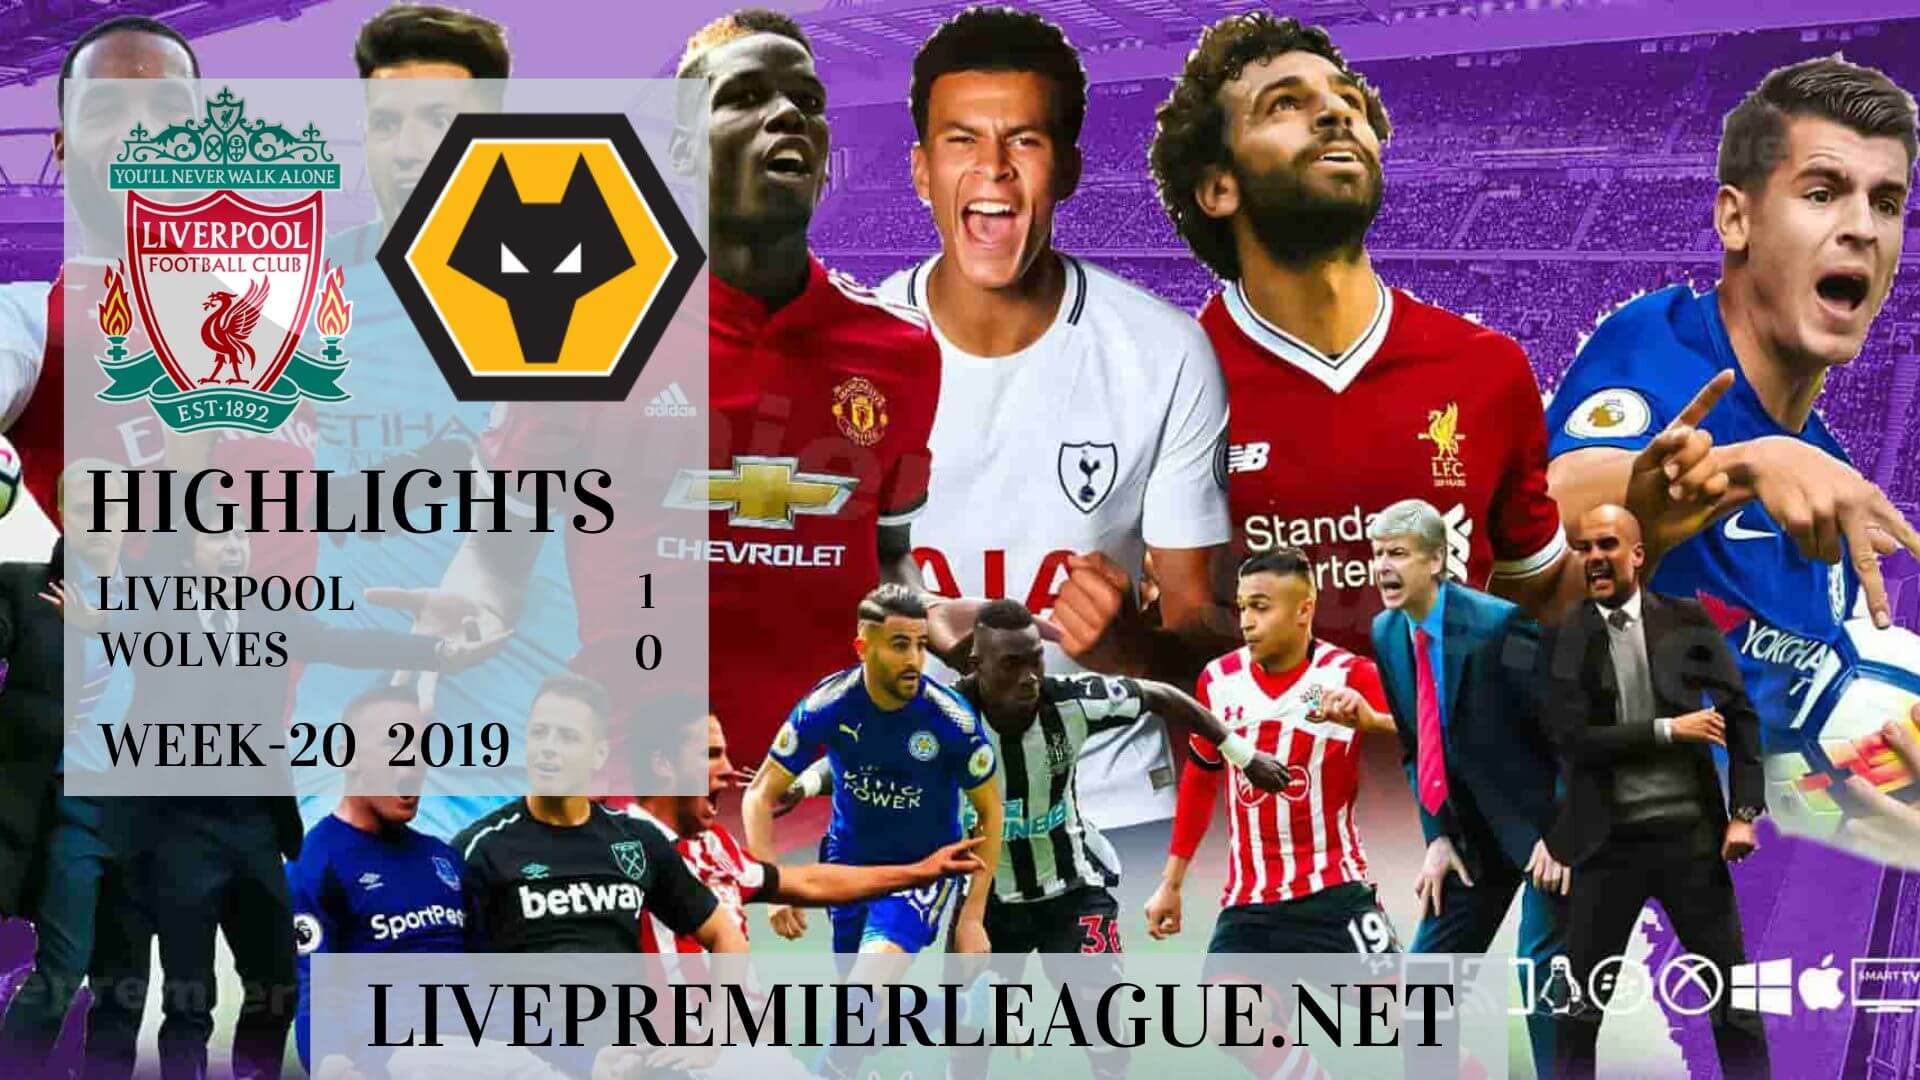 Liverpool Vs Wolves Highlights 2019 Week 20